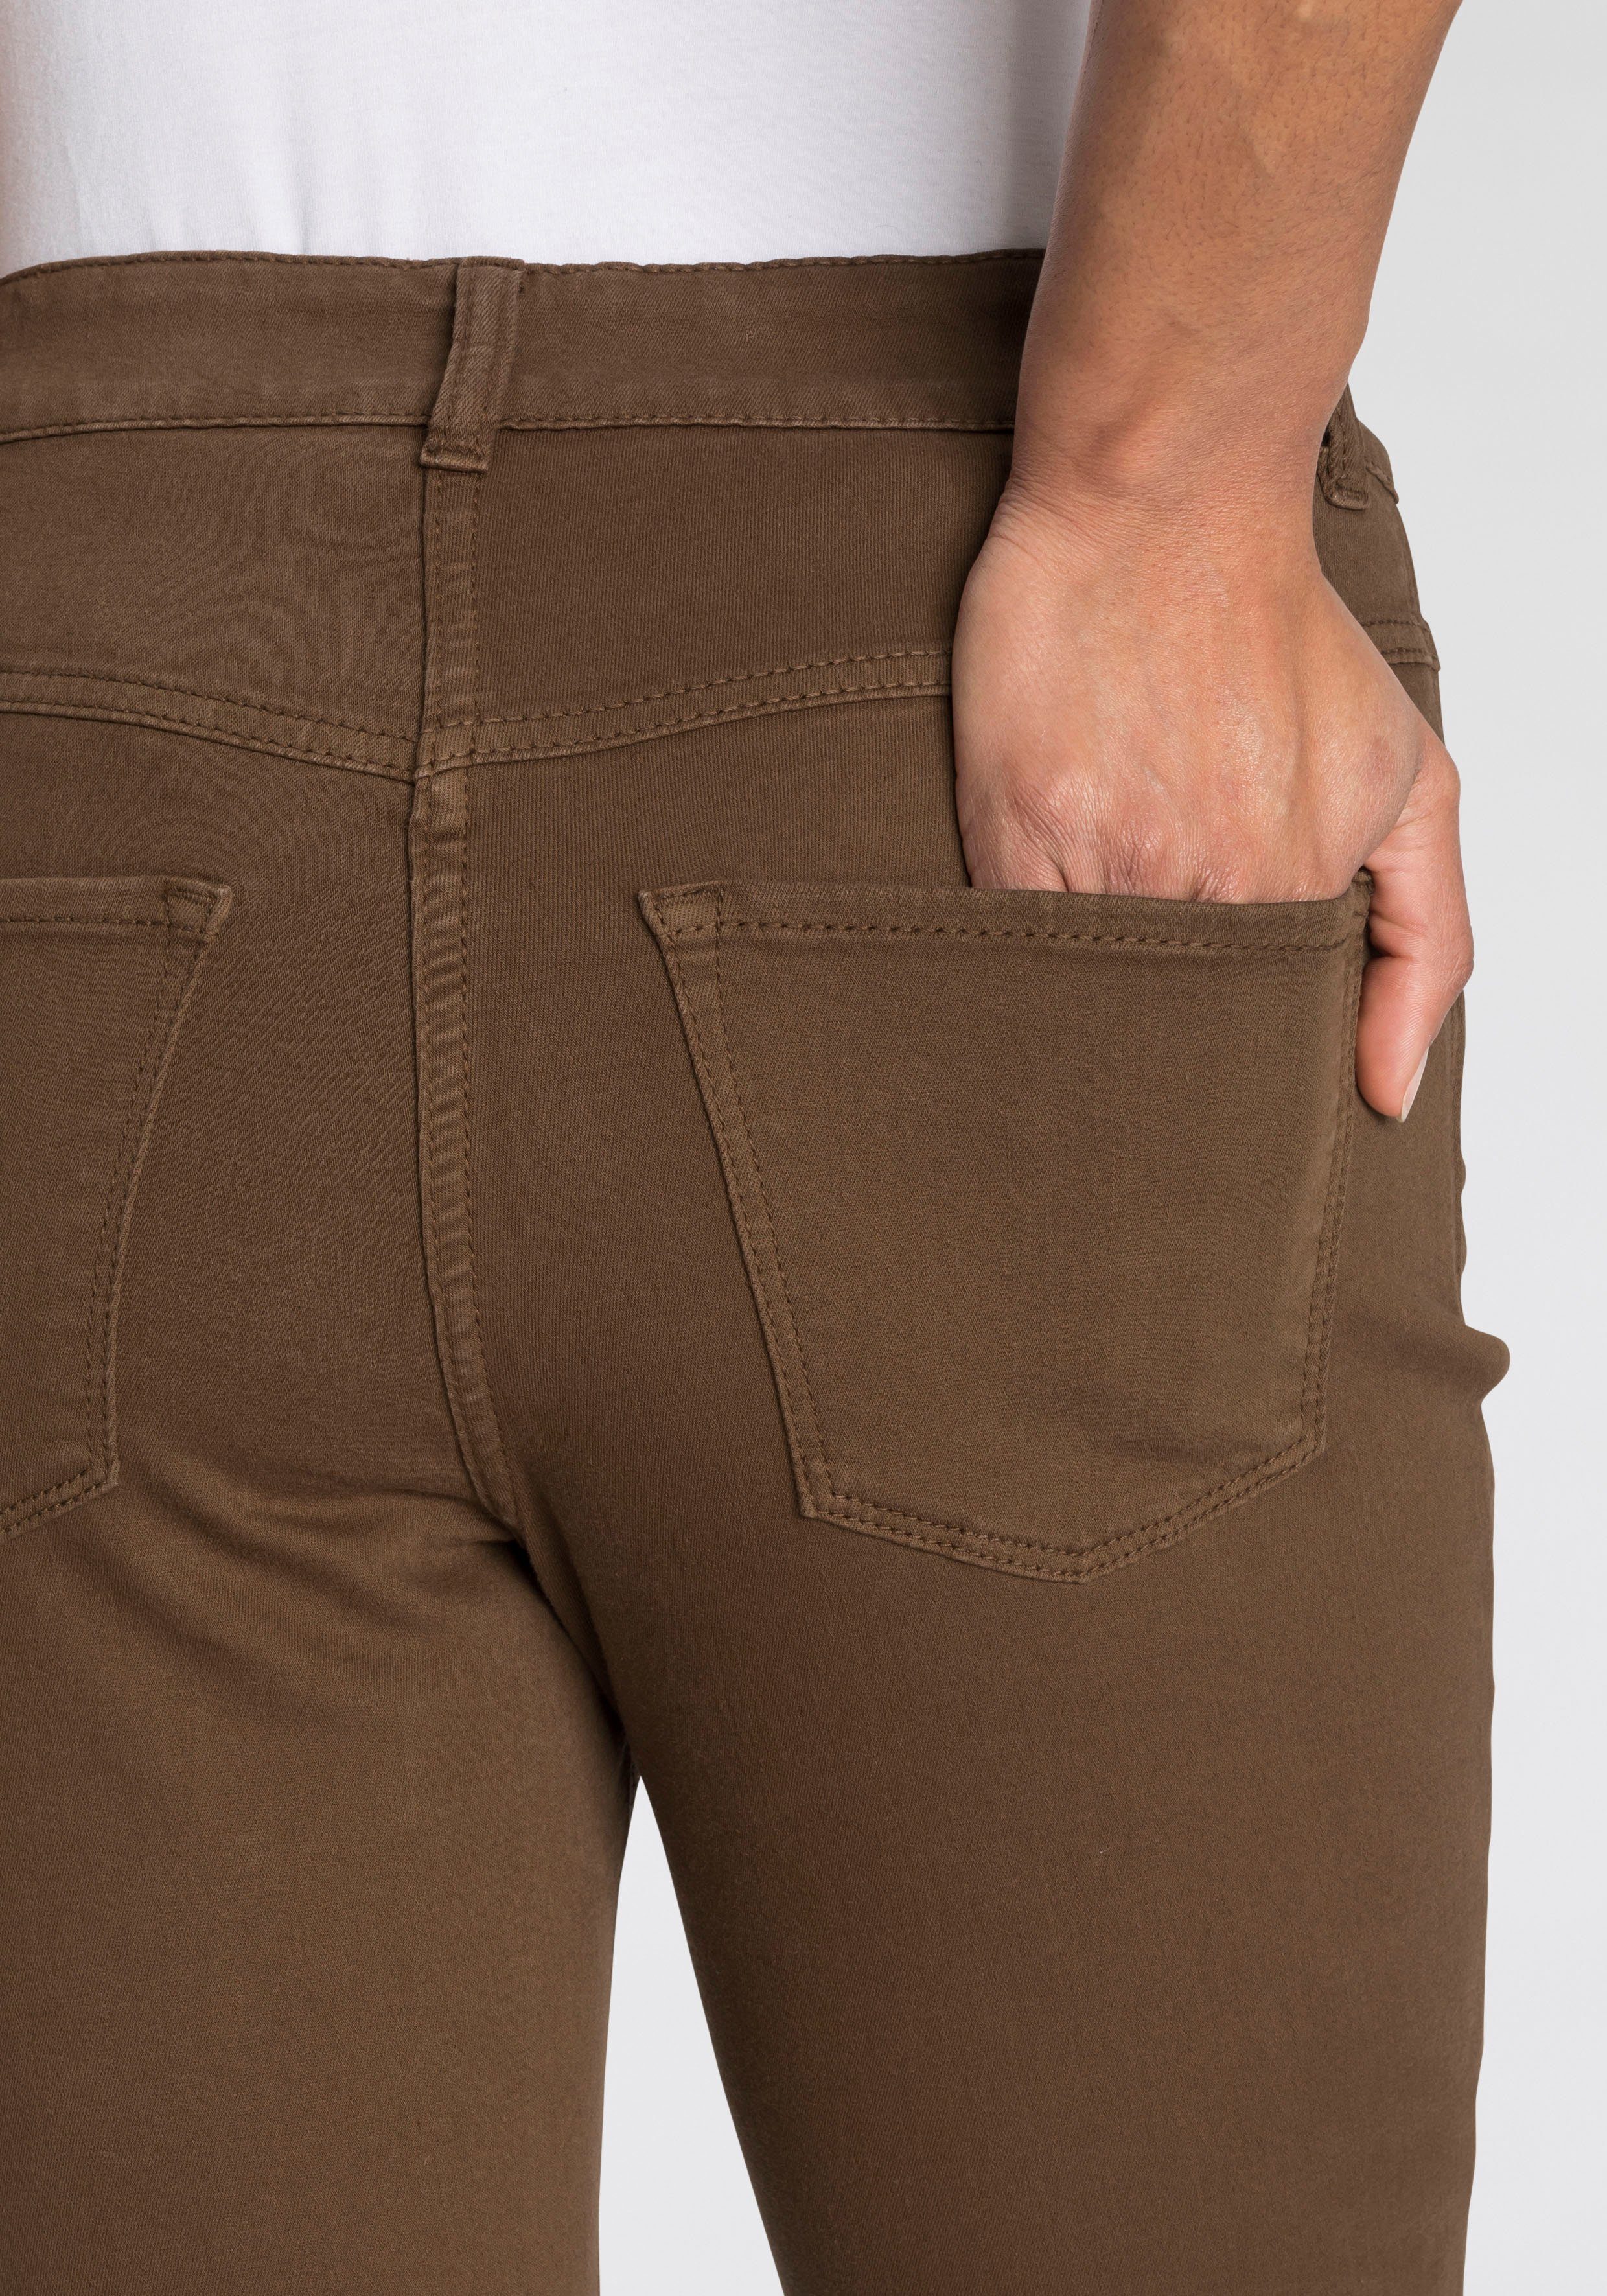 ganzen fawn MAC den Tag bequem brown Skinny-fit-Jeans Qualität sitzt Hiperstretch-Skinny Power-Stretch